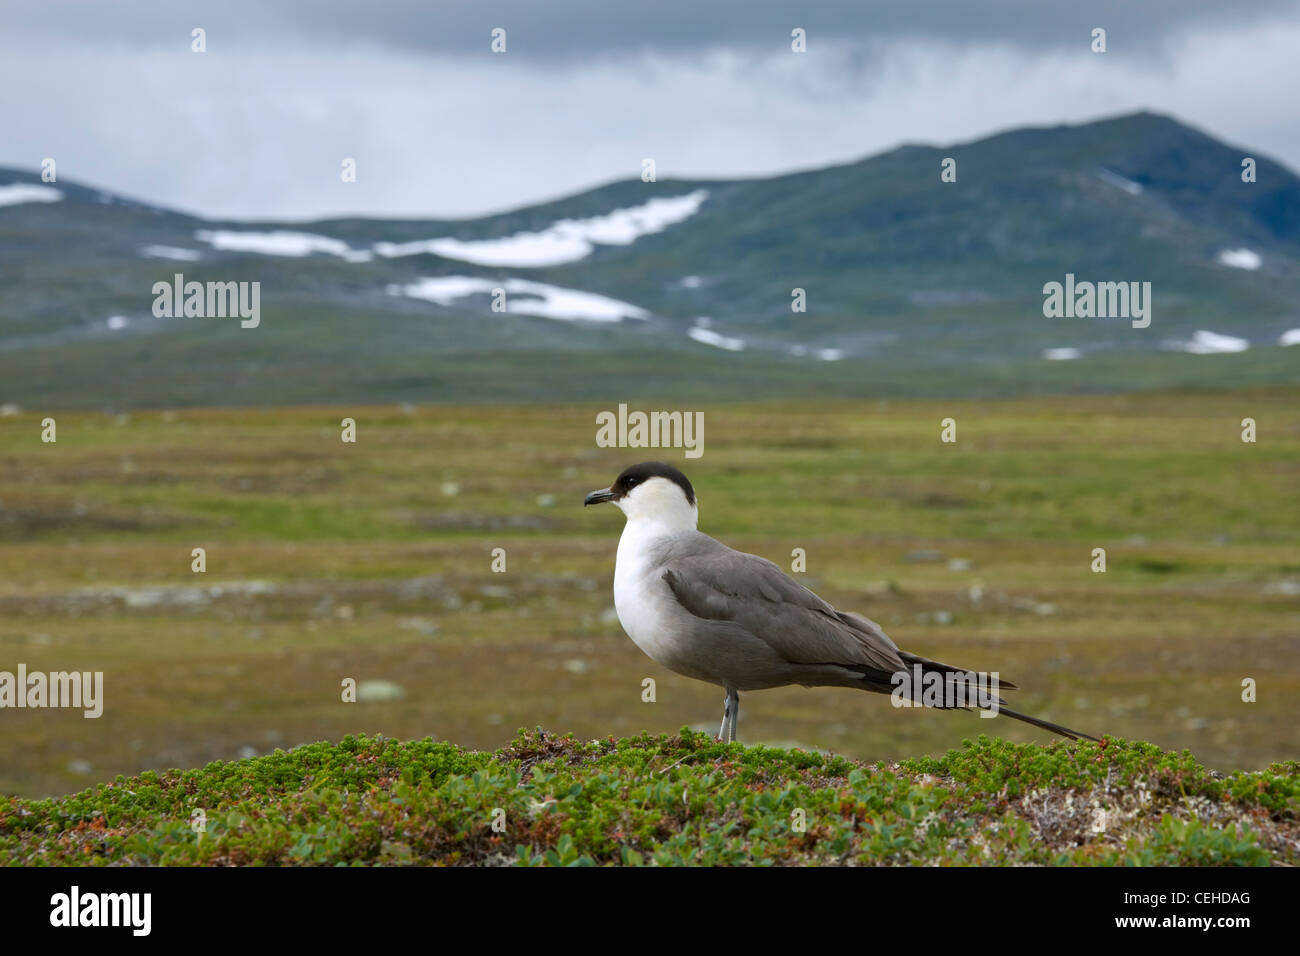 / Labbe à longue queue Labbe à longue queue (Stercorarius longicaudus)), Laponie, Suède Banque D'Images